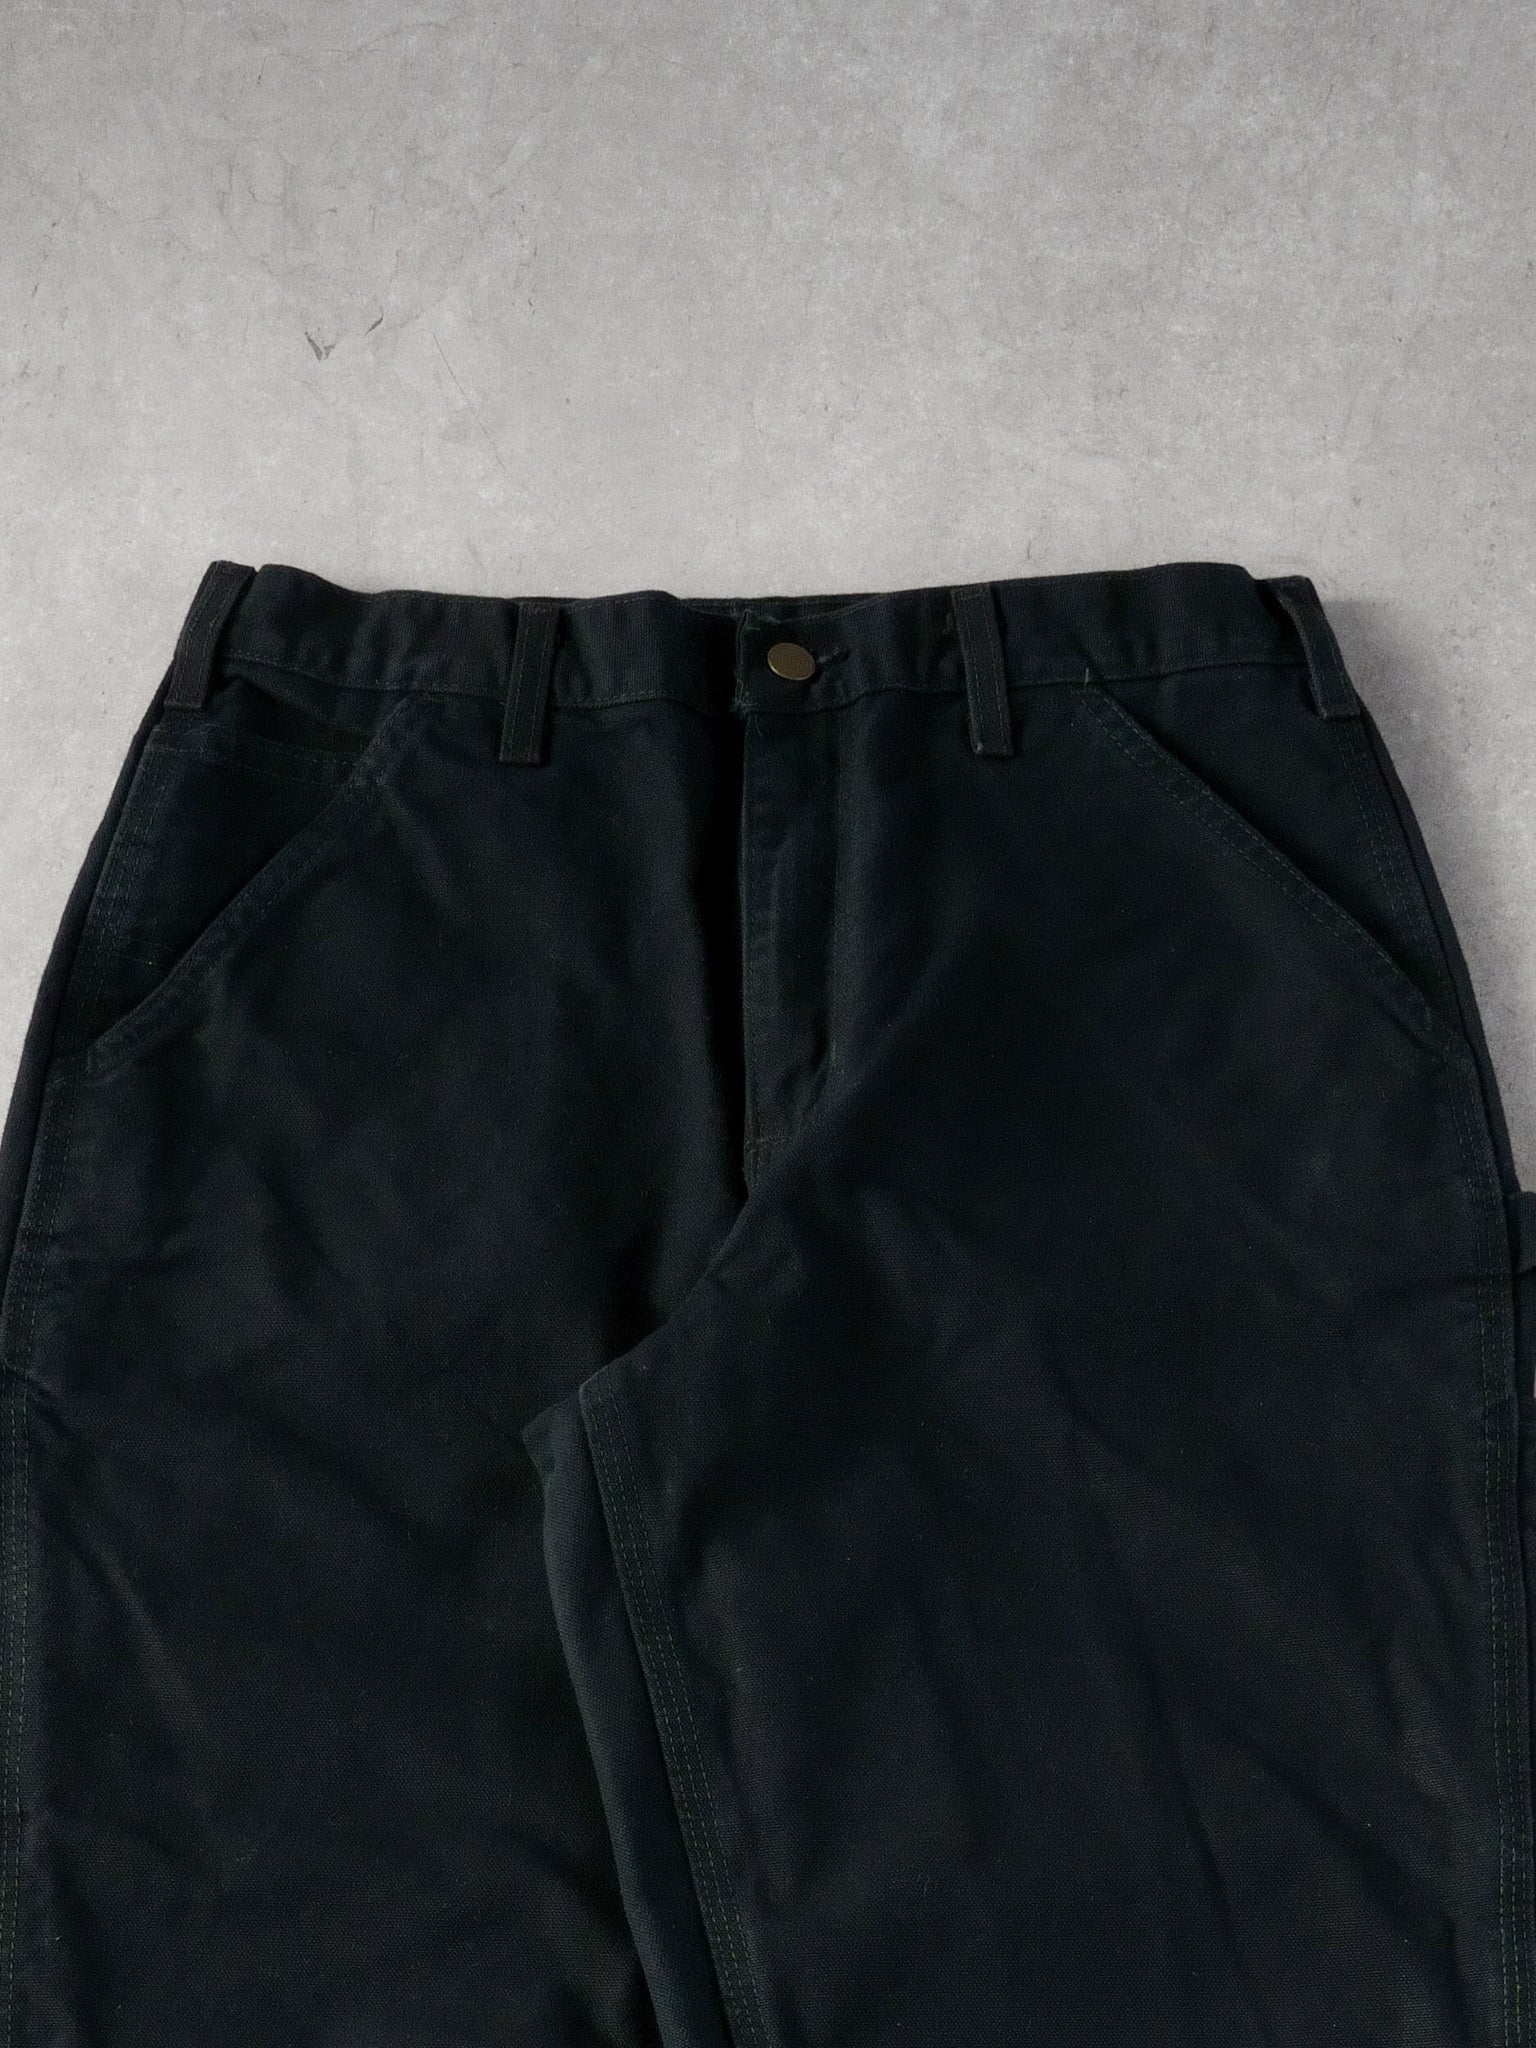 Vintage 90 Black Carhartt Dungeree Fit Carpenter Pants (32x32)